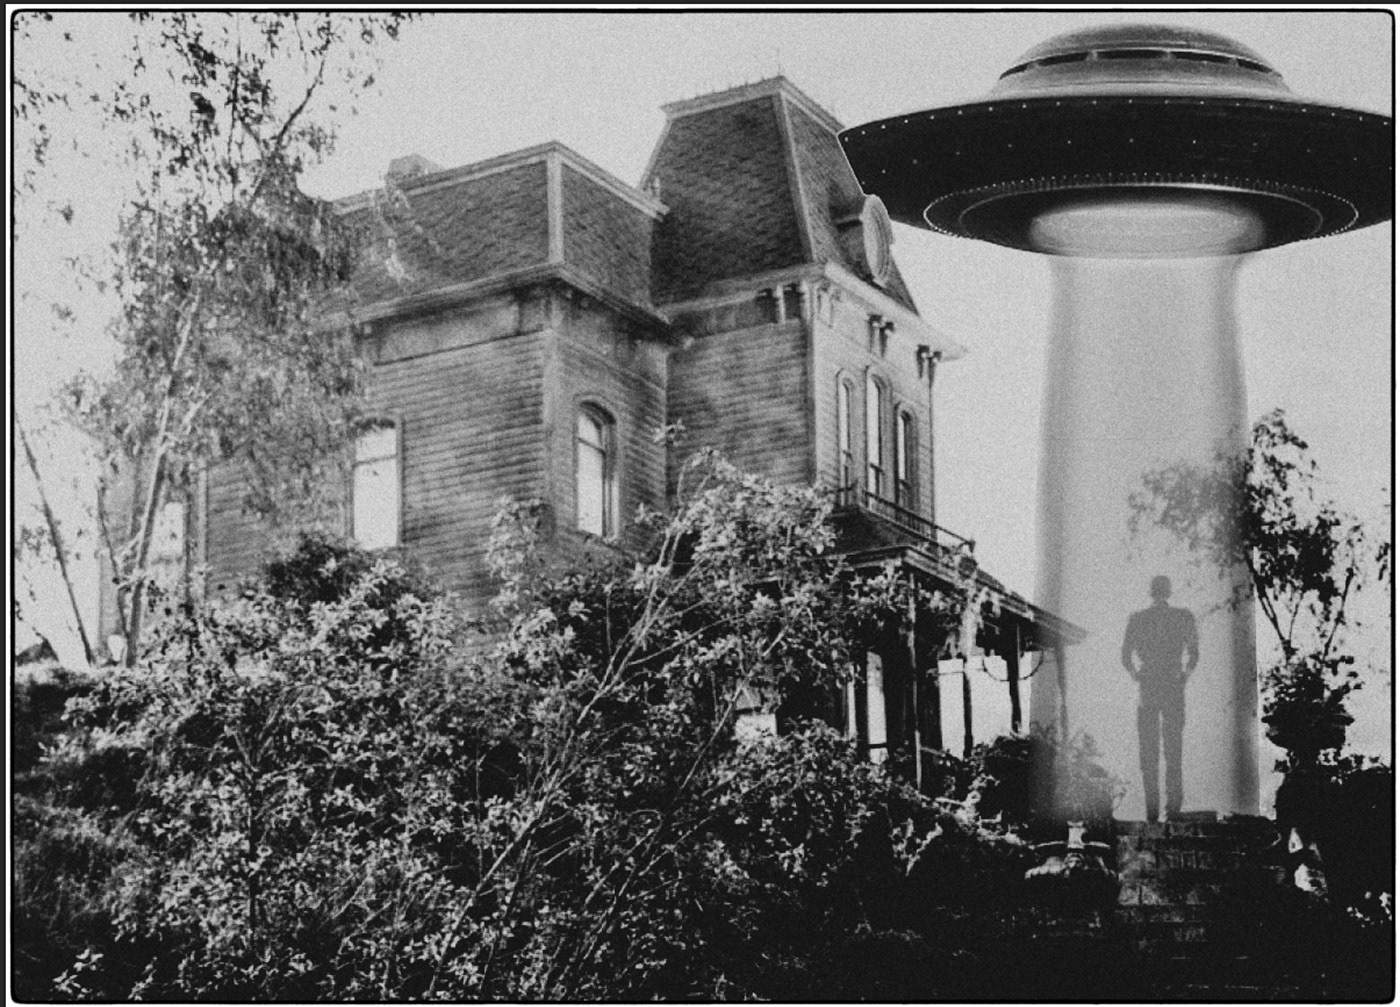 psyco Hitchcock black and white concept art UFO ufo abduction